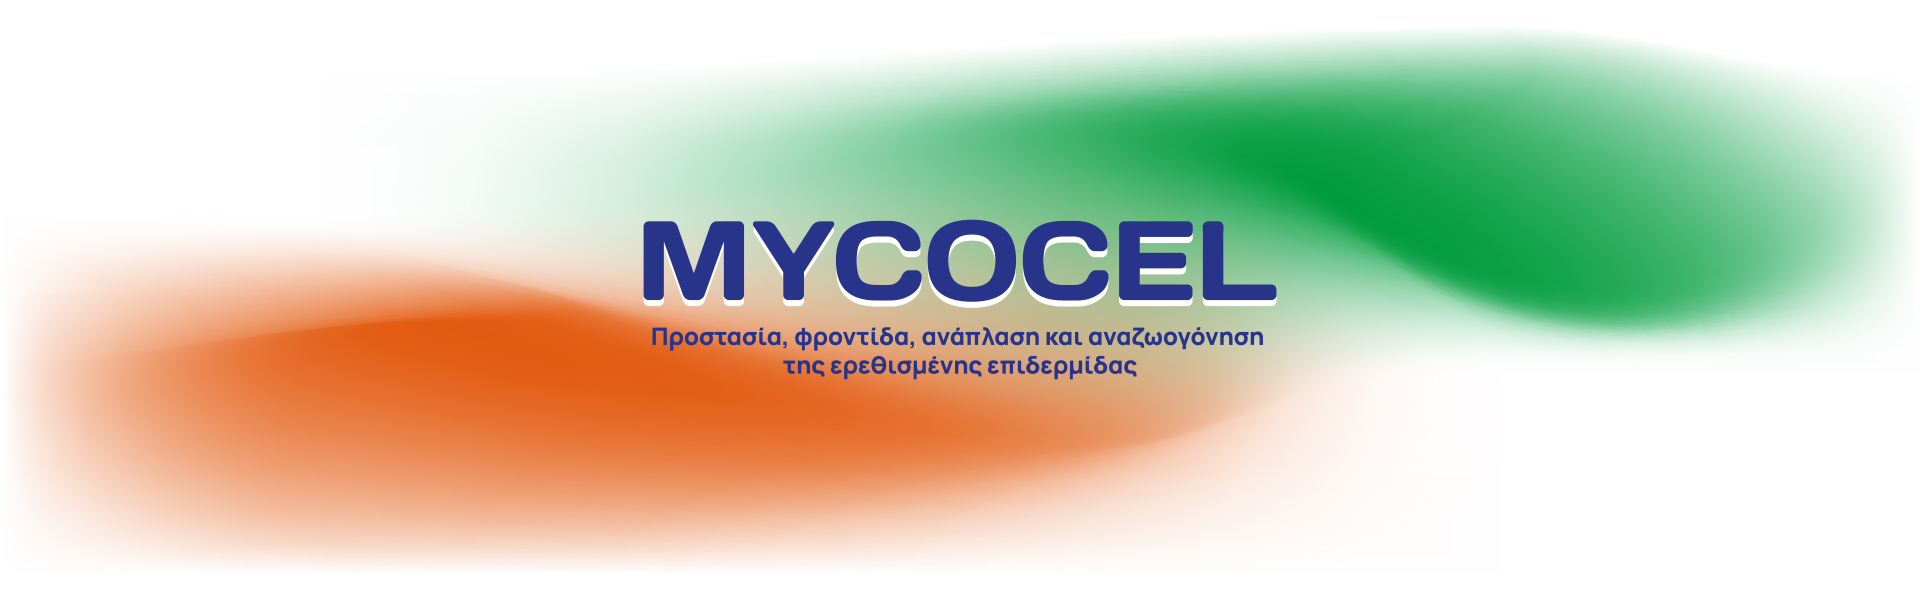 01 MycoCEL Banner